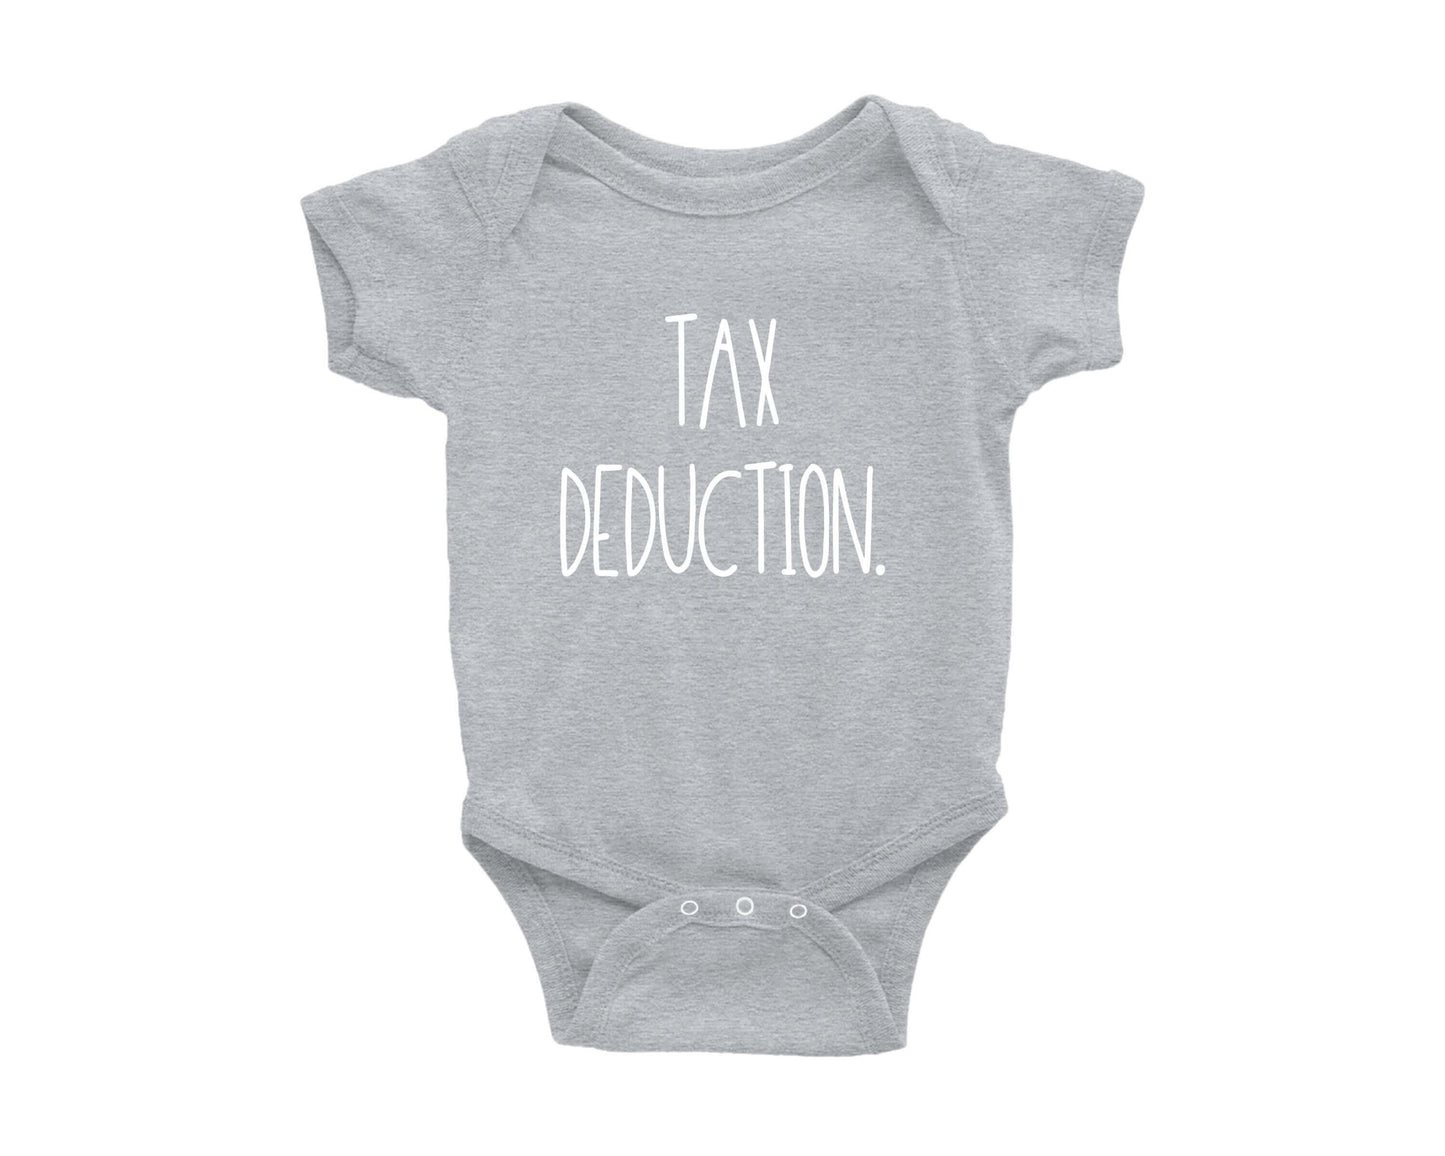 Tax Deduction Baby Onesie